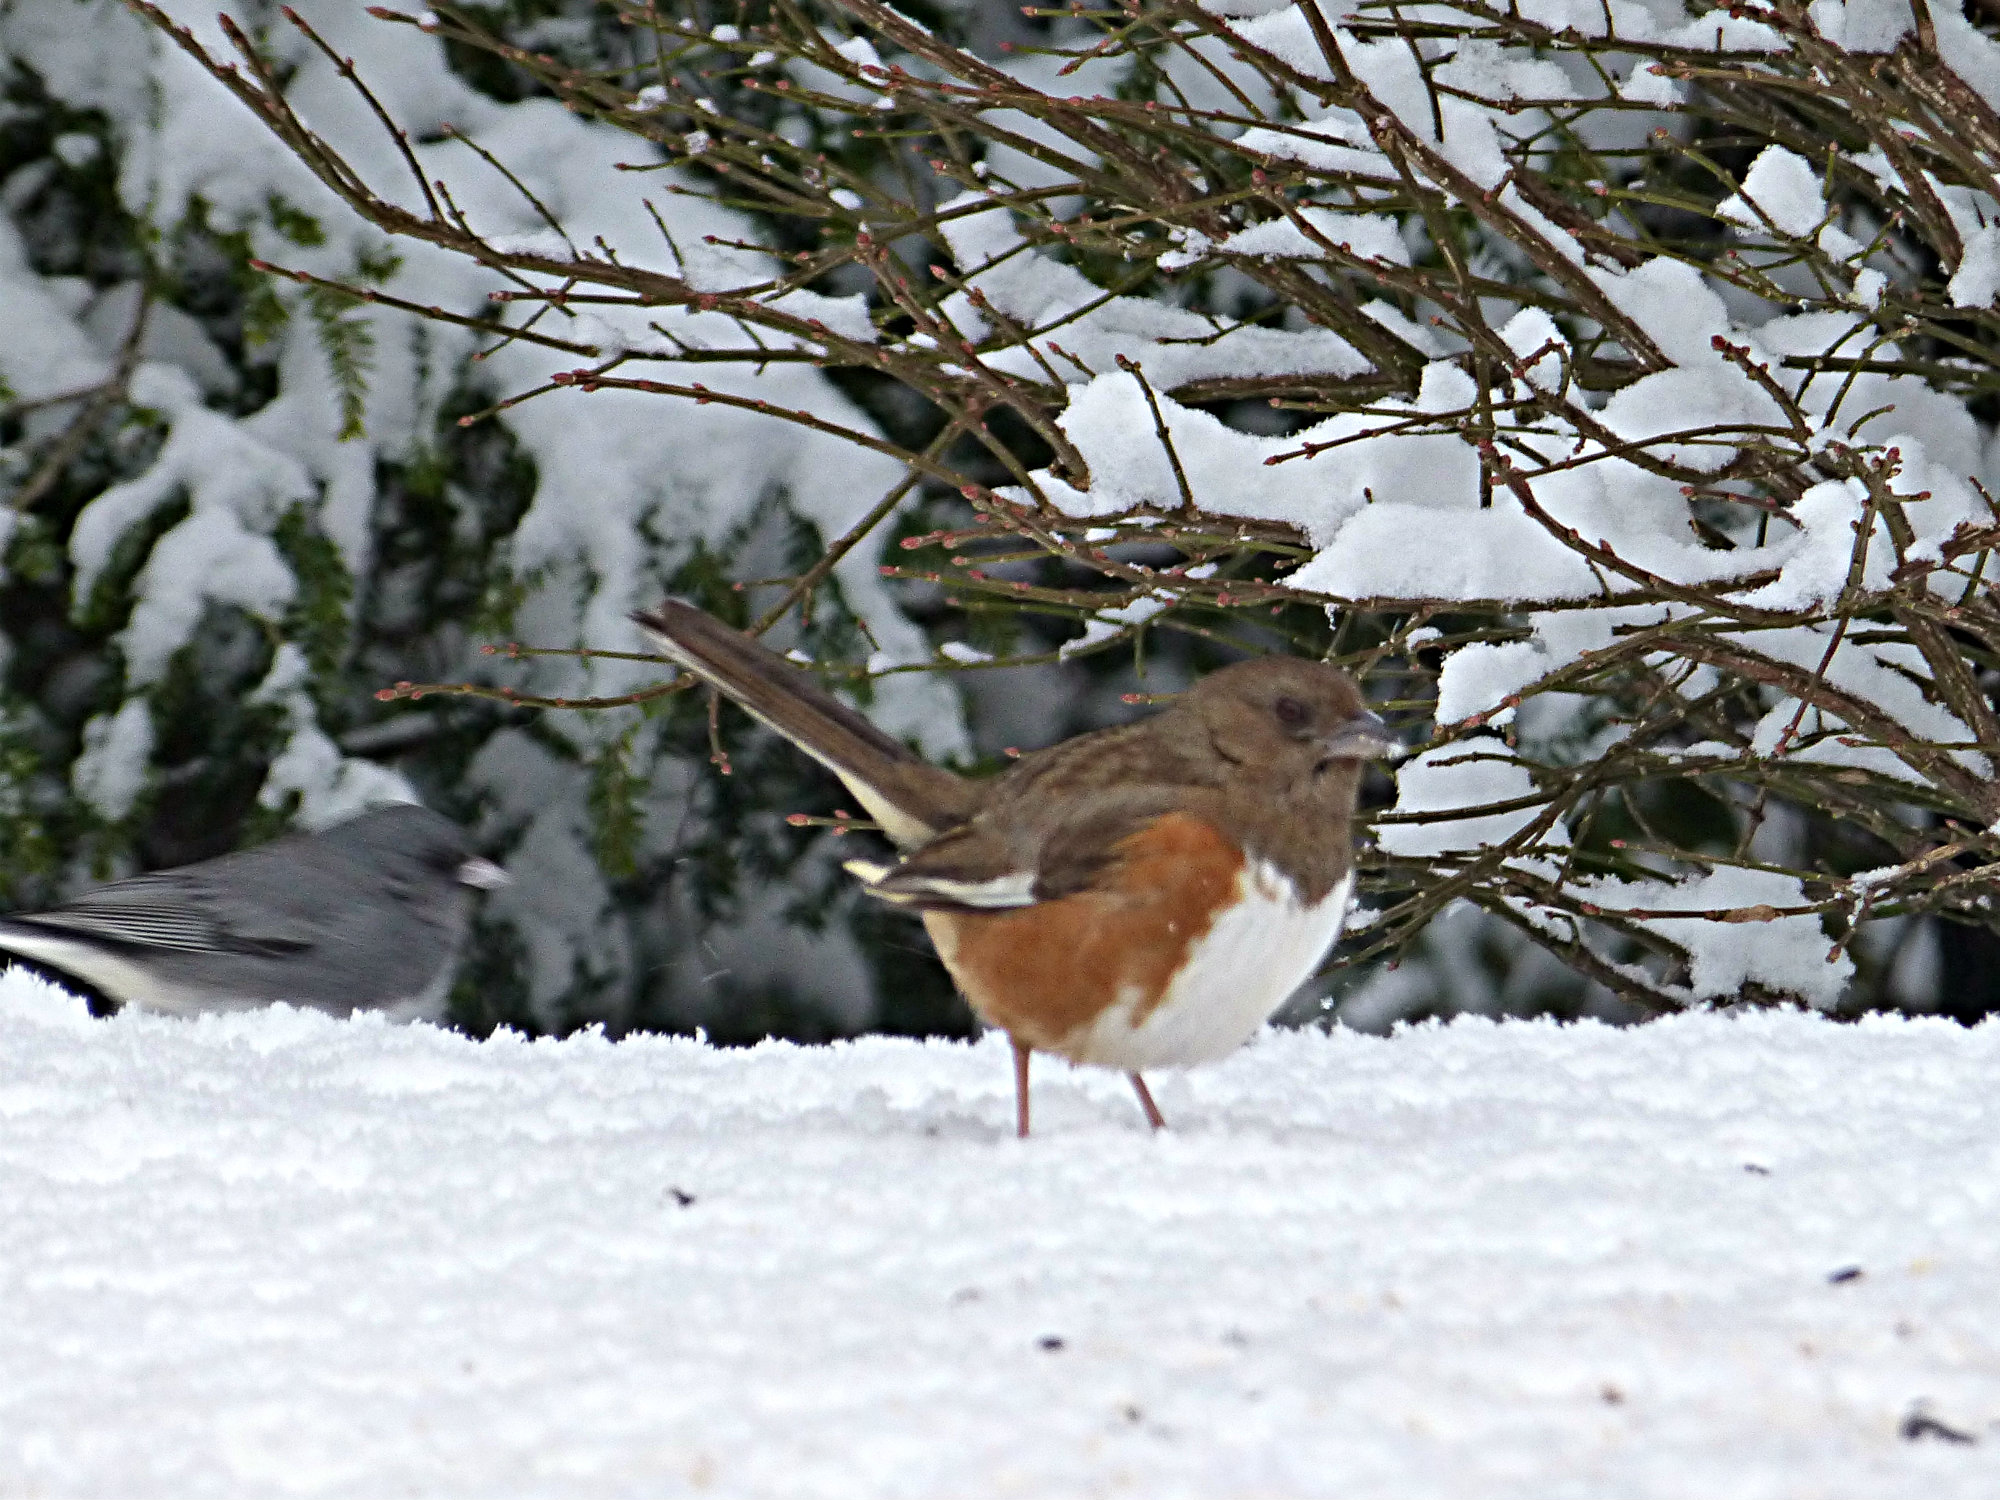 Stocky bird standing in the snow